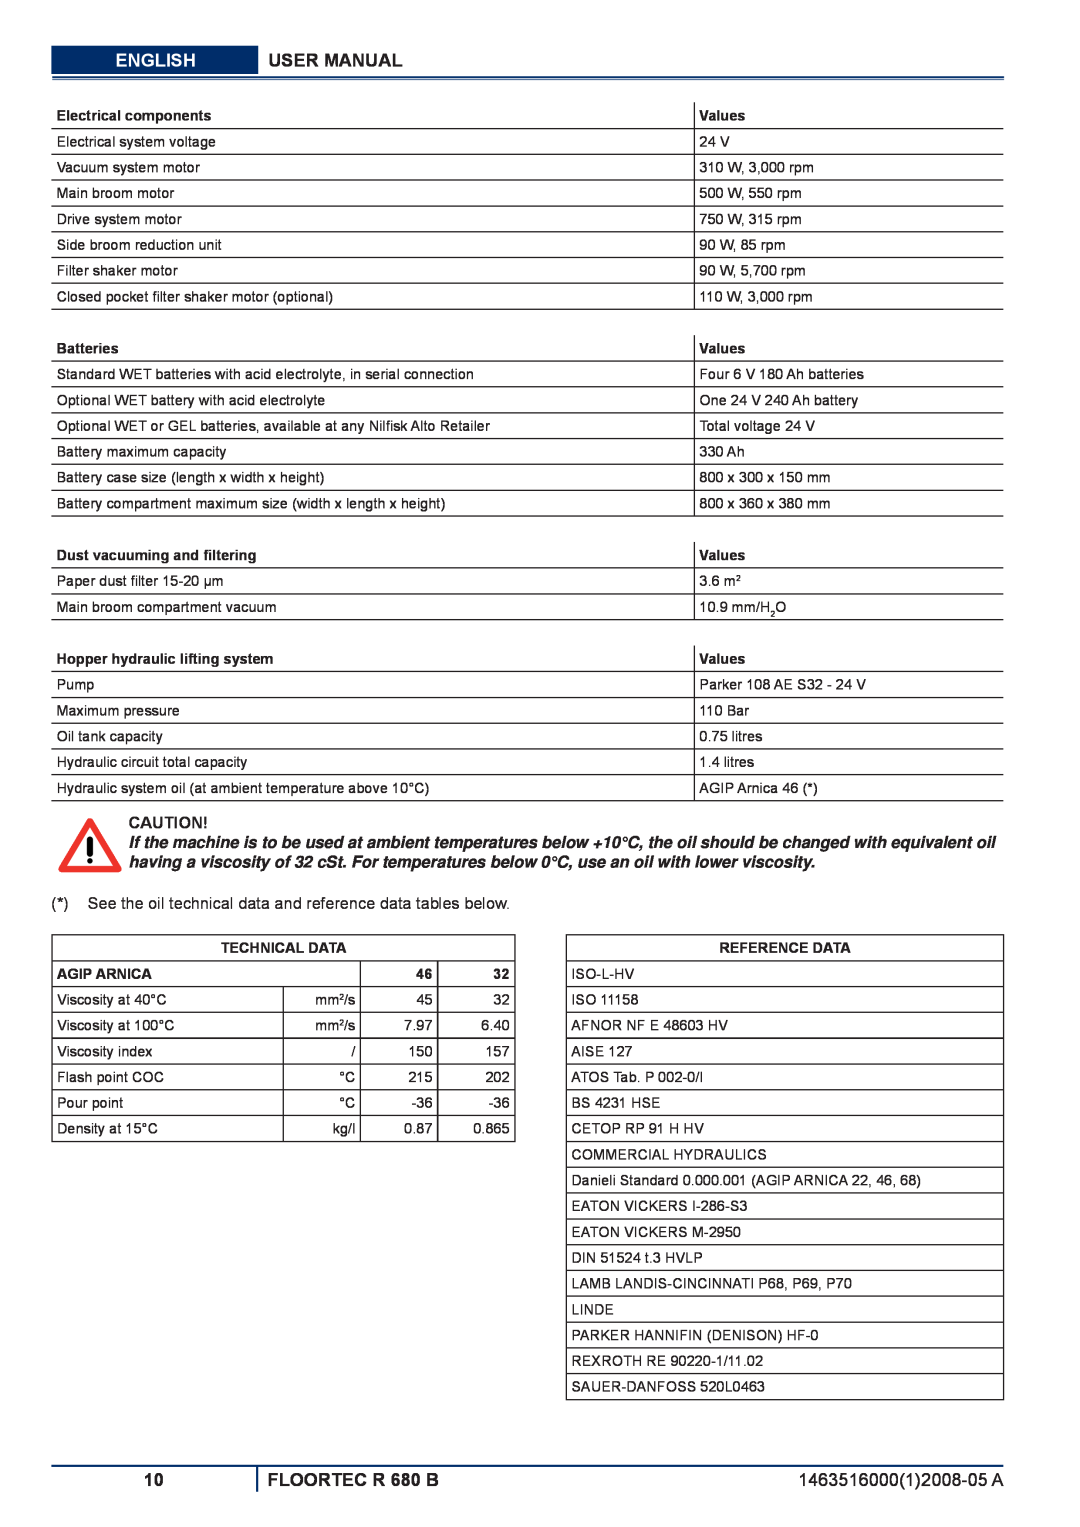 Nilfisk-ALTO manuel dutilisation English, User Manual, FLOORTEC R 680 B, Electrical components 